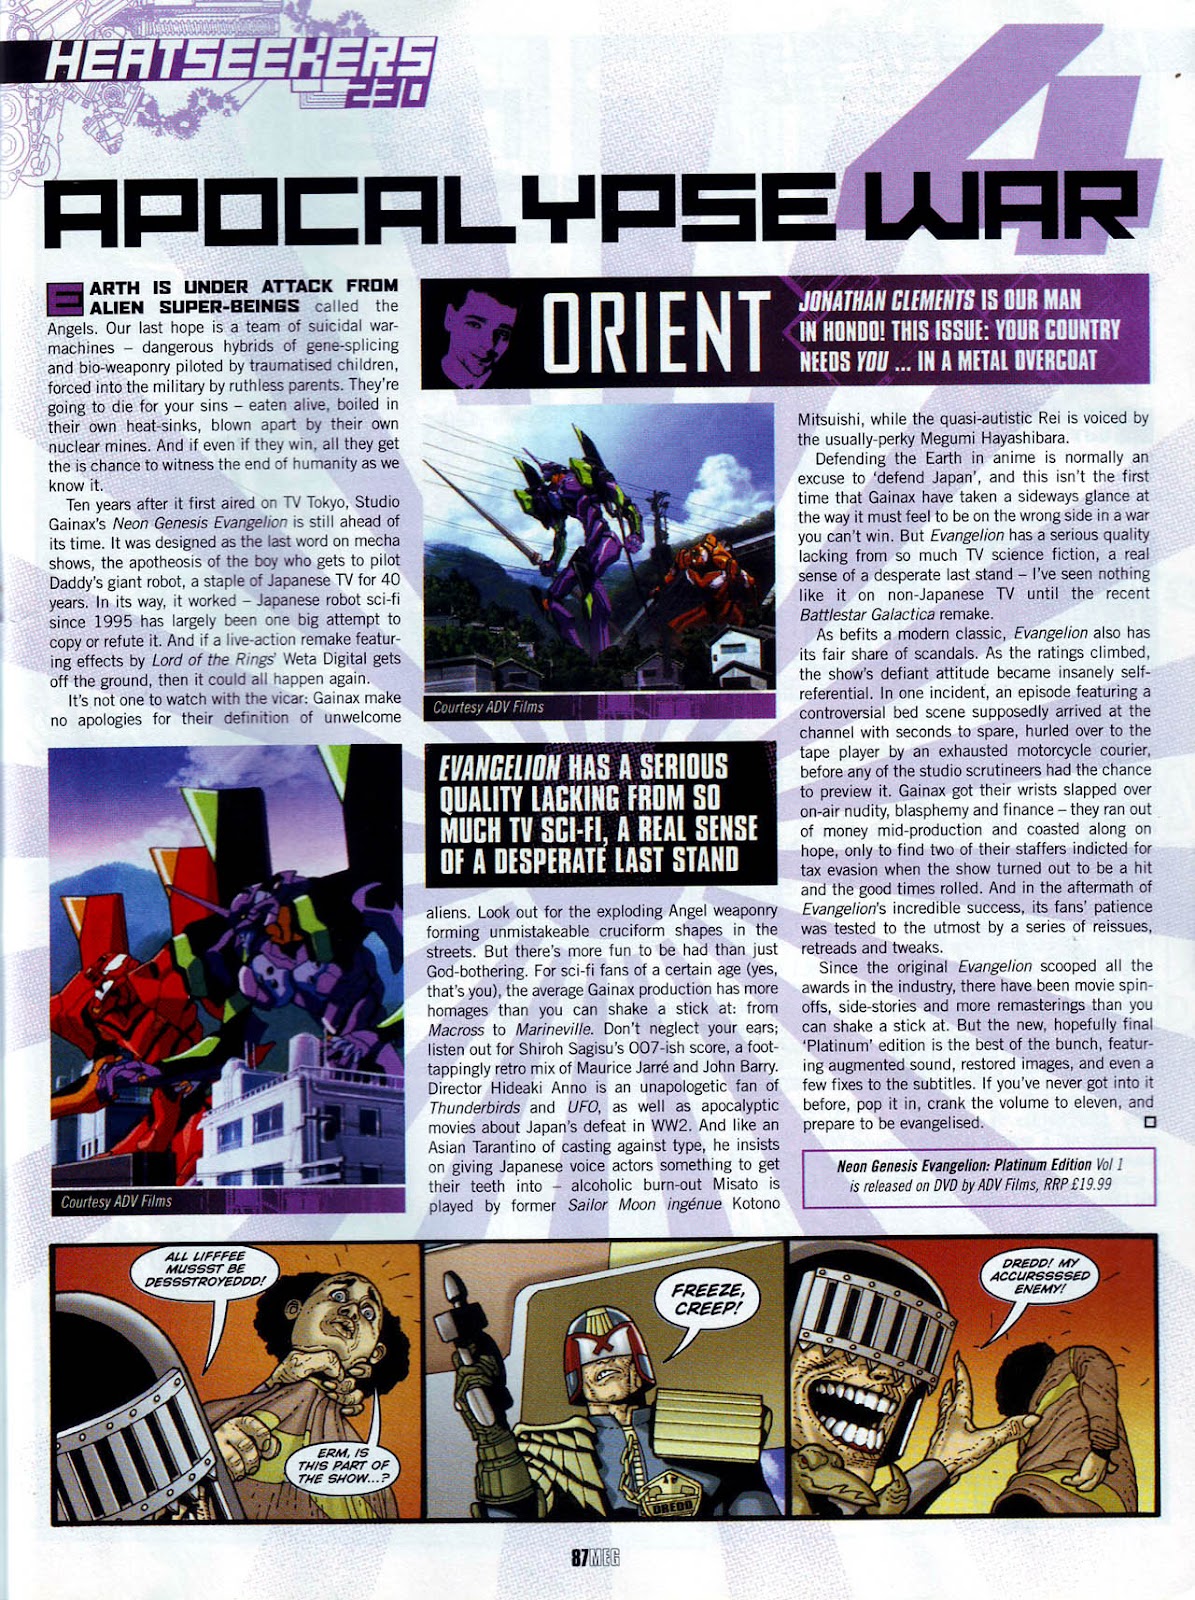 Judge Dredd Megazine (Vol. 5) issue 230 - Page 87